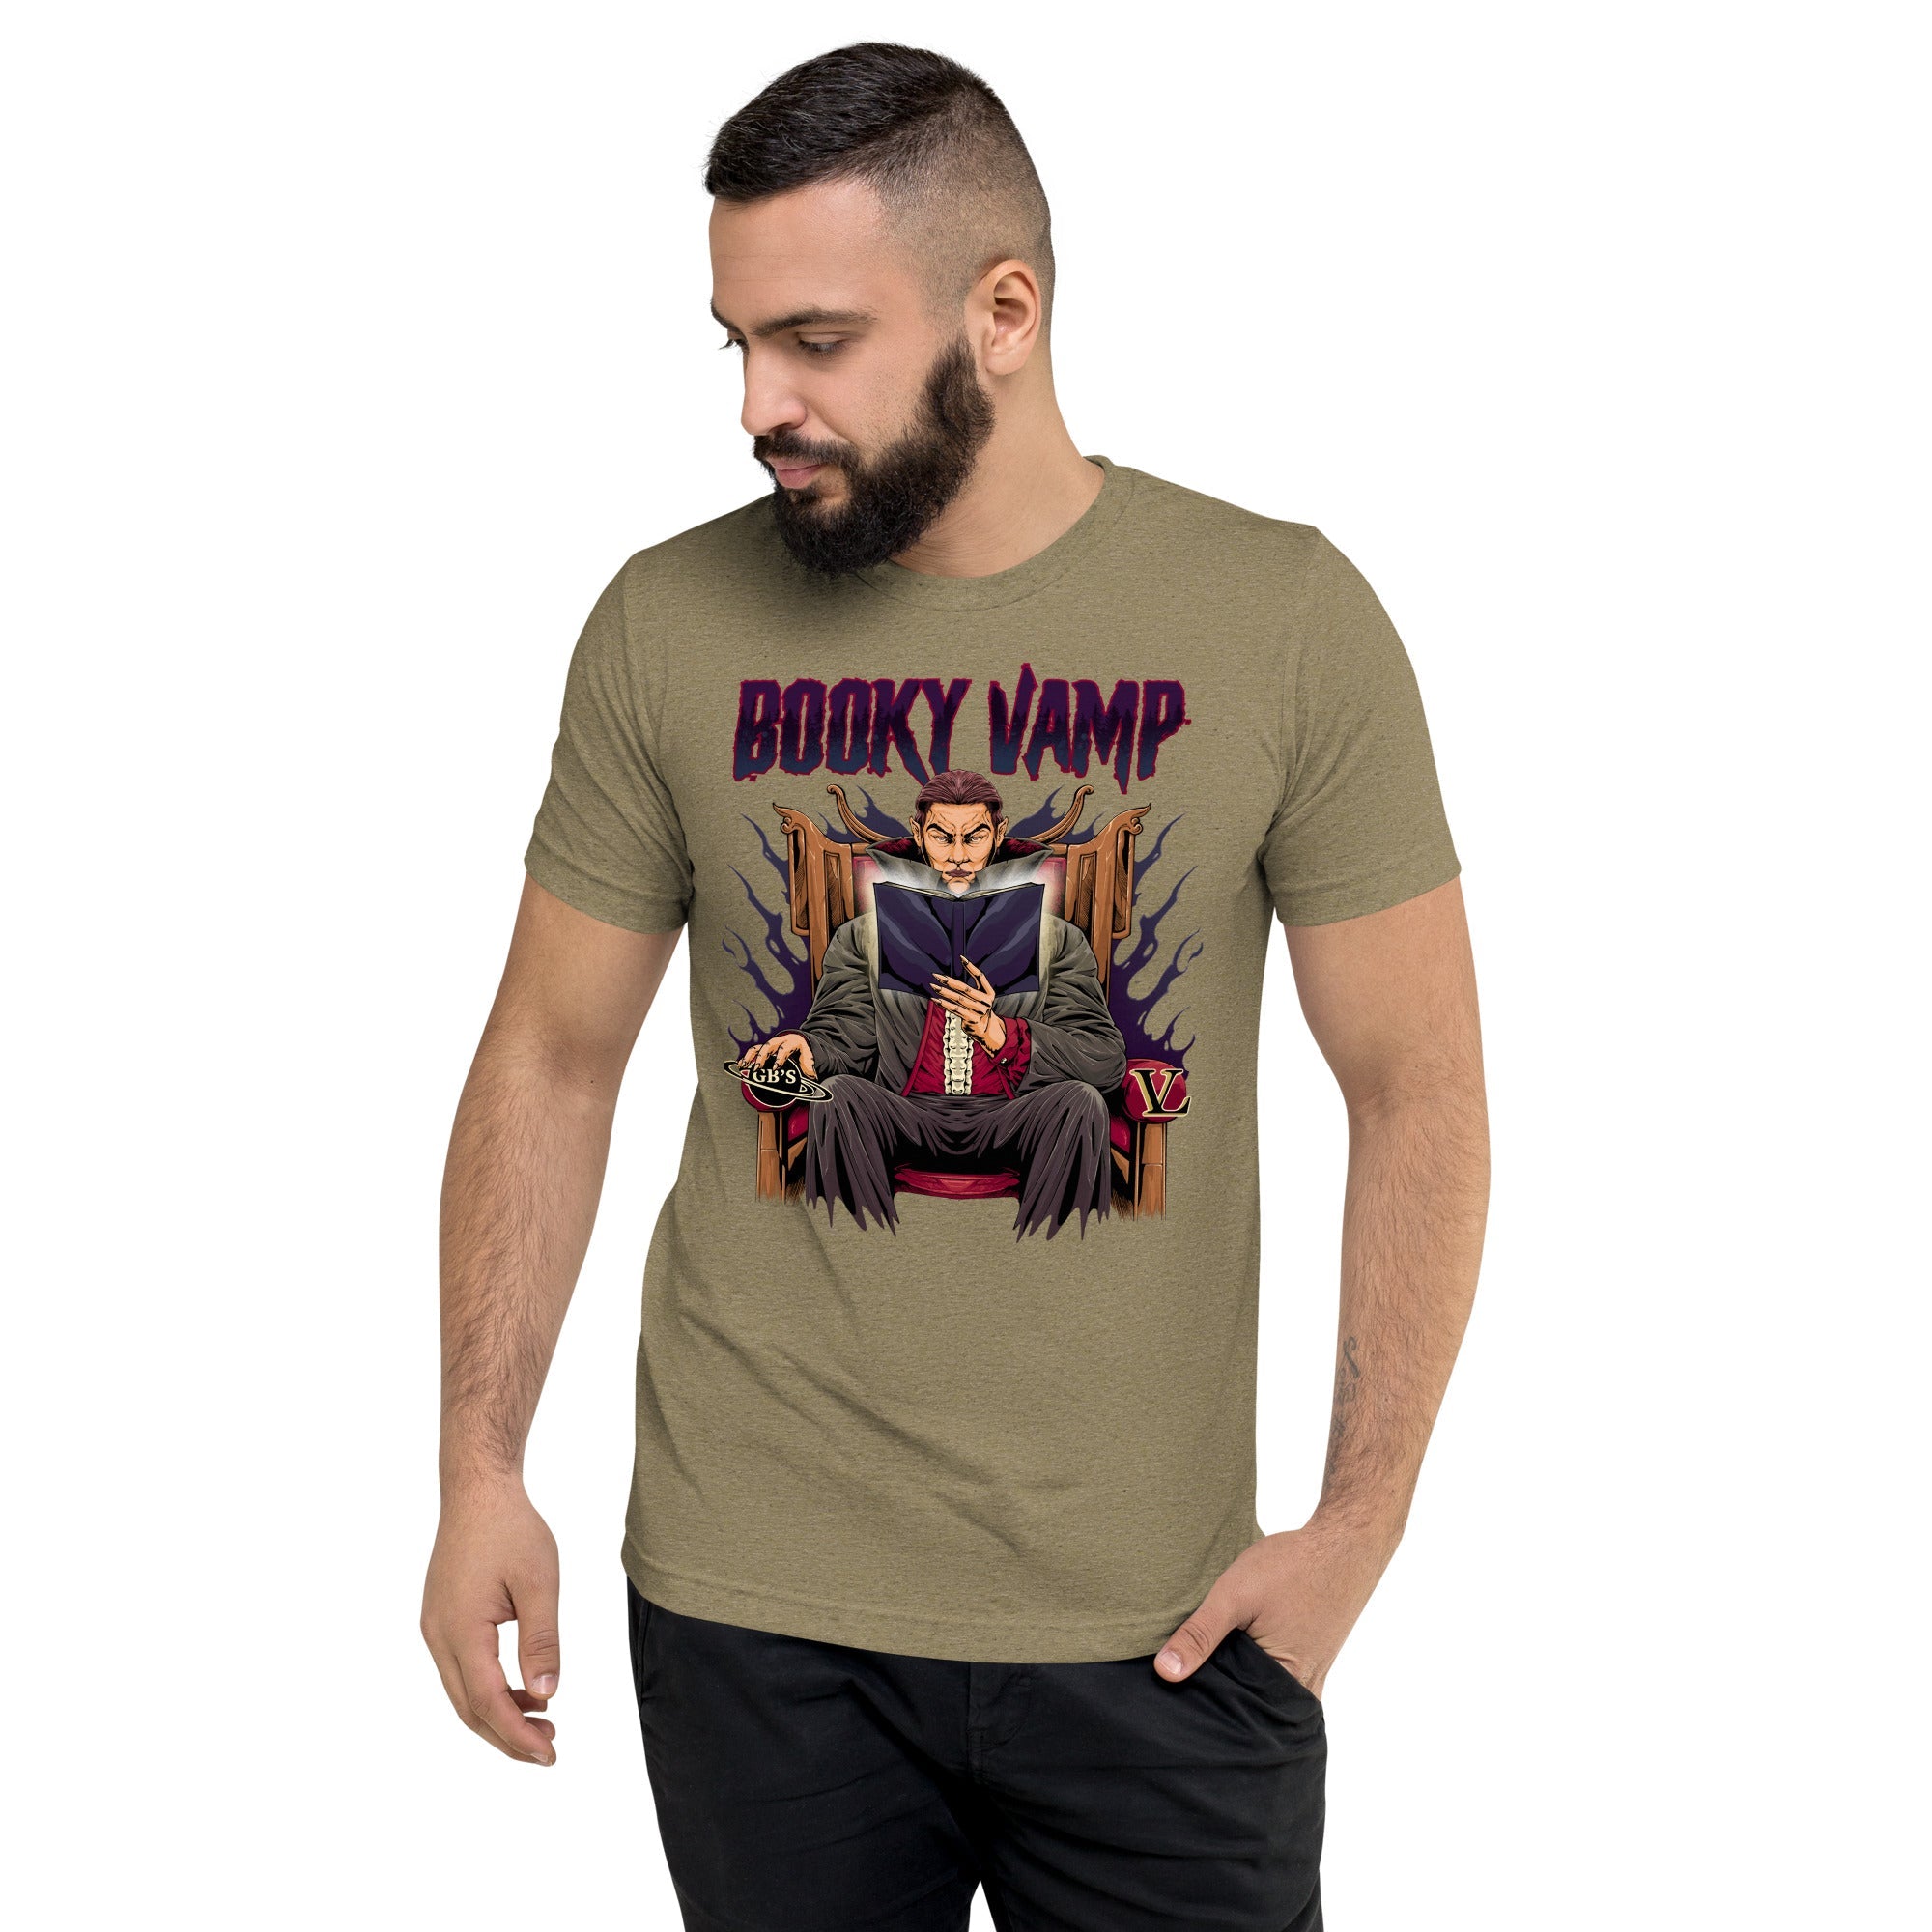 GBNY Olive Triblend / XS Vamp Life X GBNY "Booky Vamp" T-shirt - Men's 2381652_17374